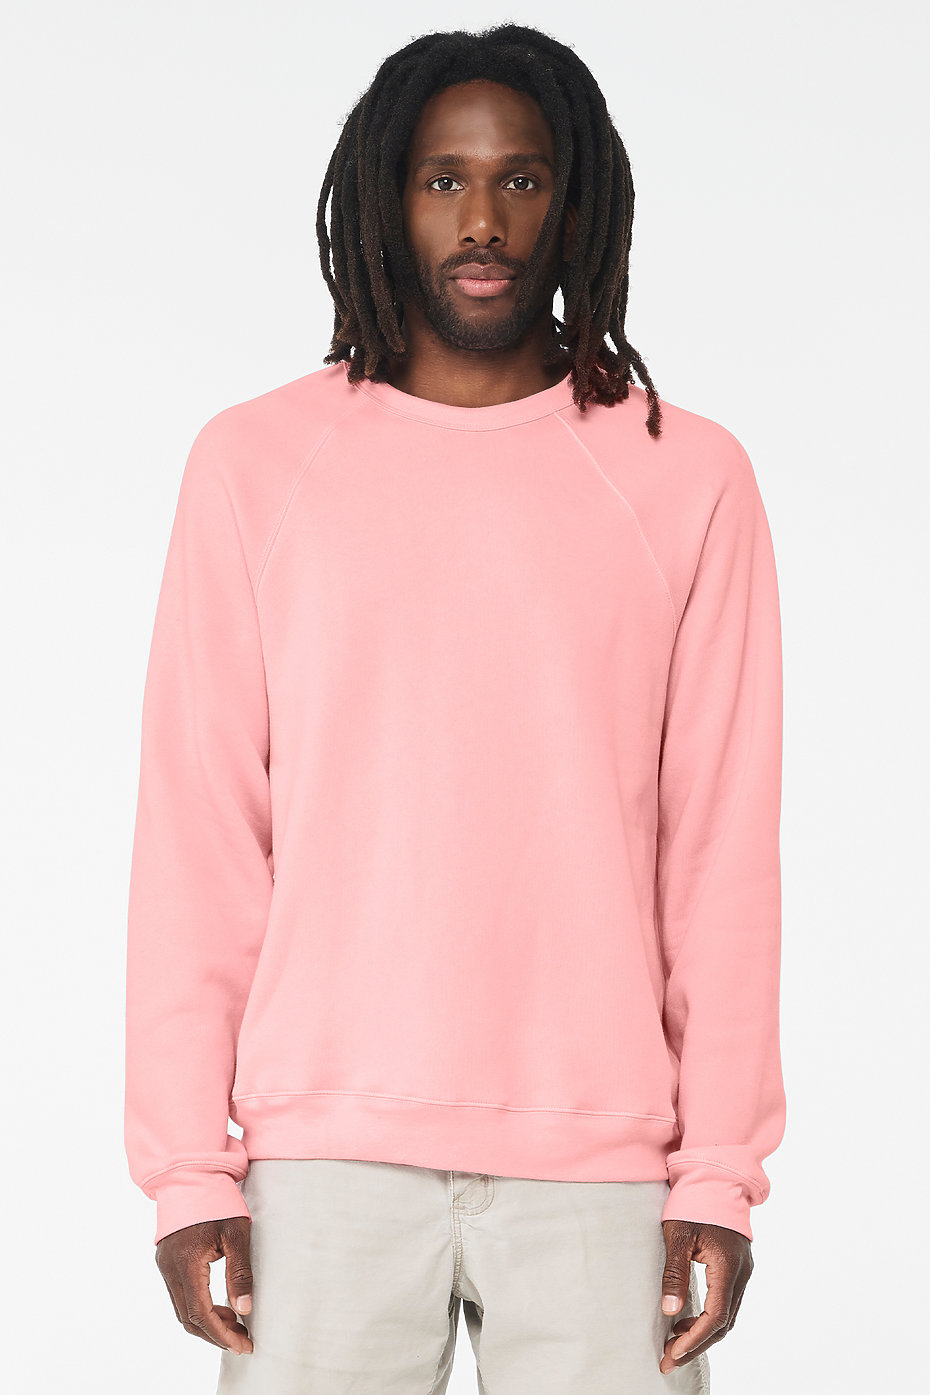 Custom Sweatshirts For Men  Wholesale Crewneck Sweatshirts